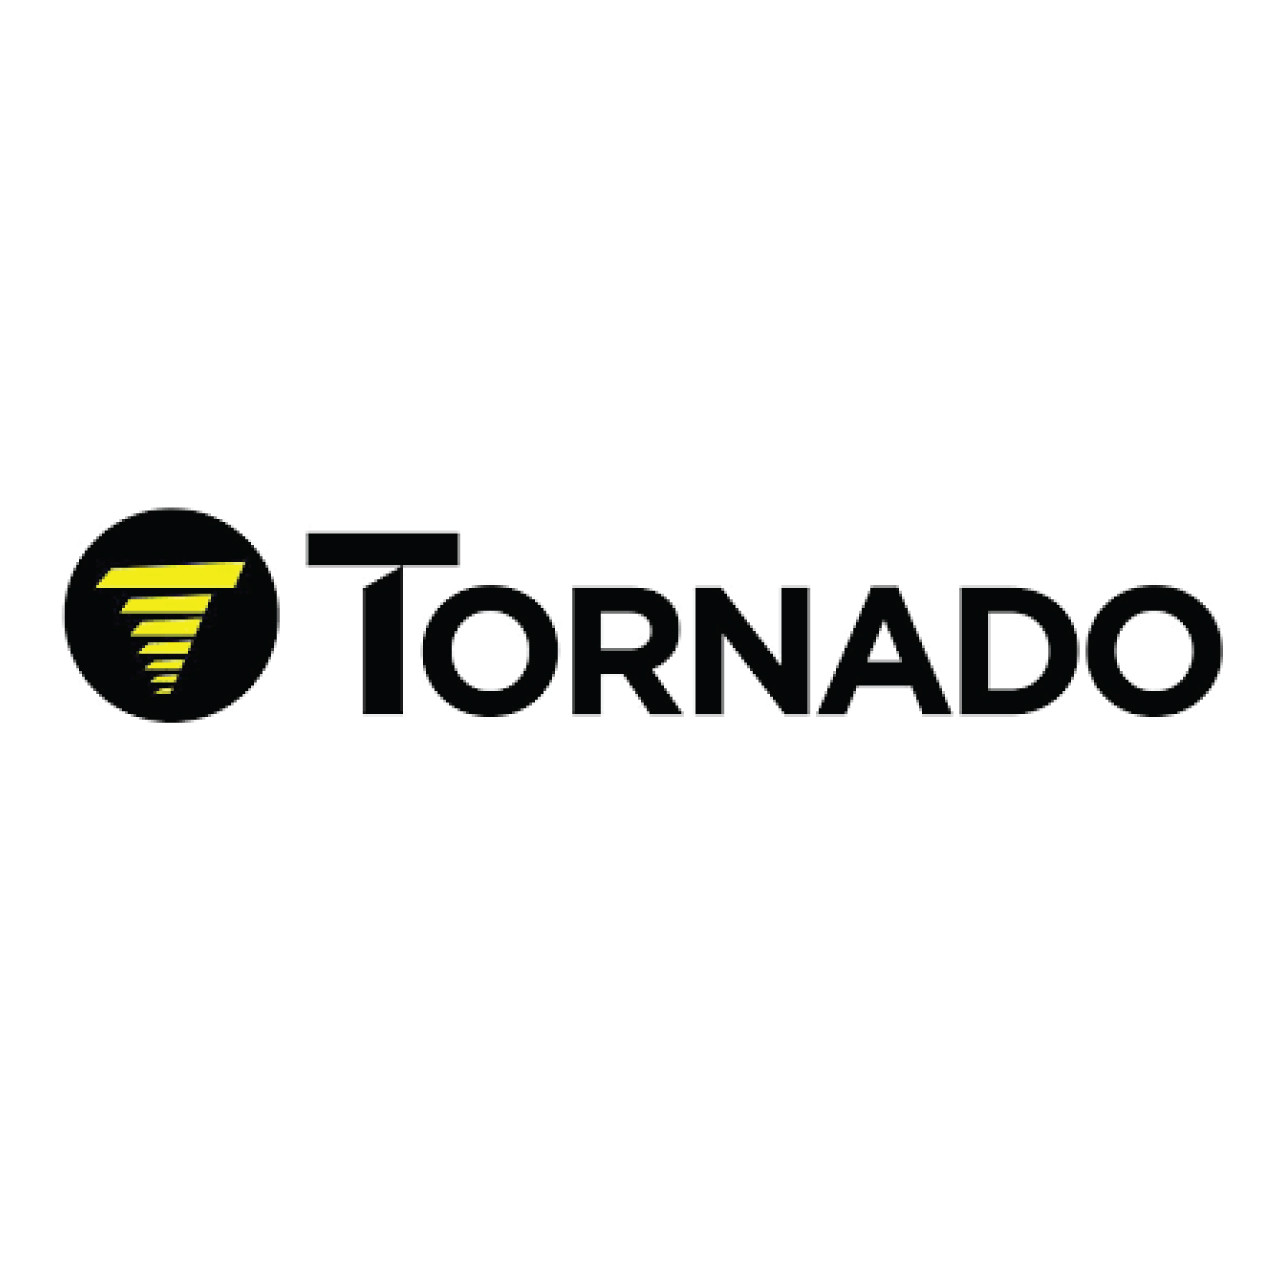 02-4201-0000, Tornado 02-4201-0000, Tornado SCREEN STRAINER WITH CHECK VALVE 100 MESH 4193A-5-100SS, Tornado parts